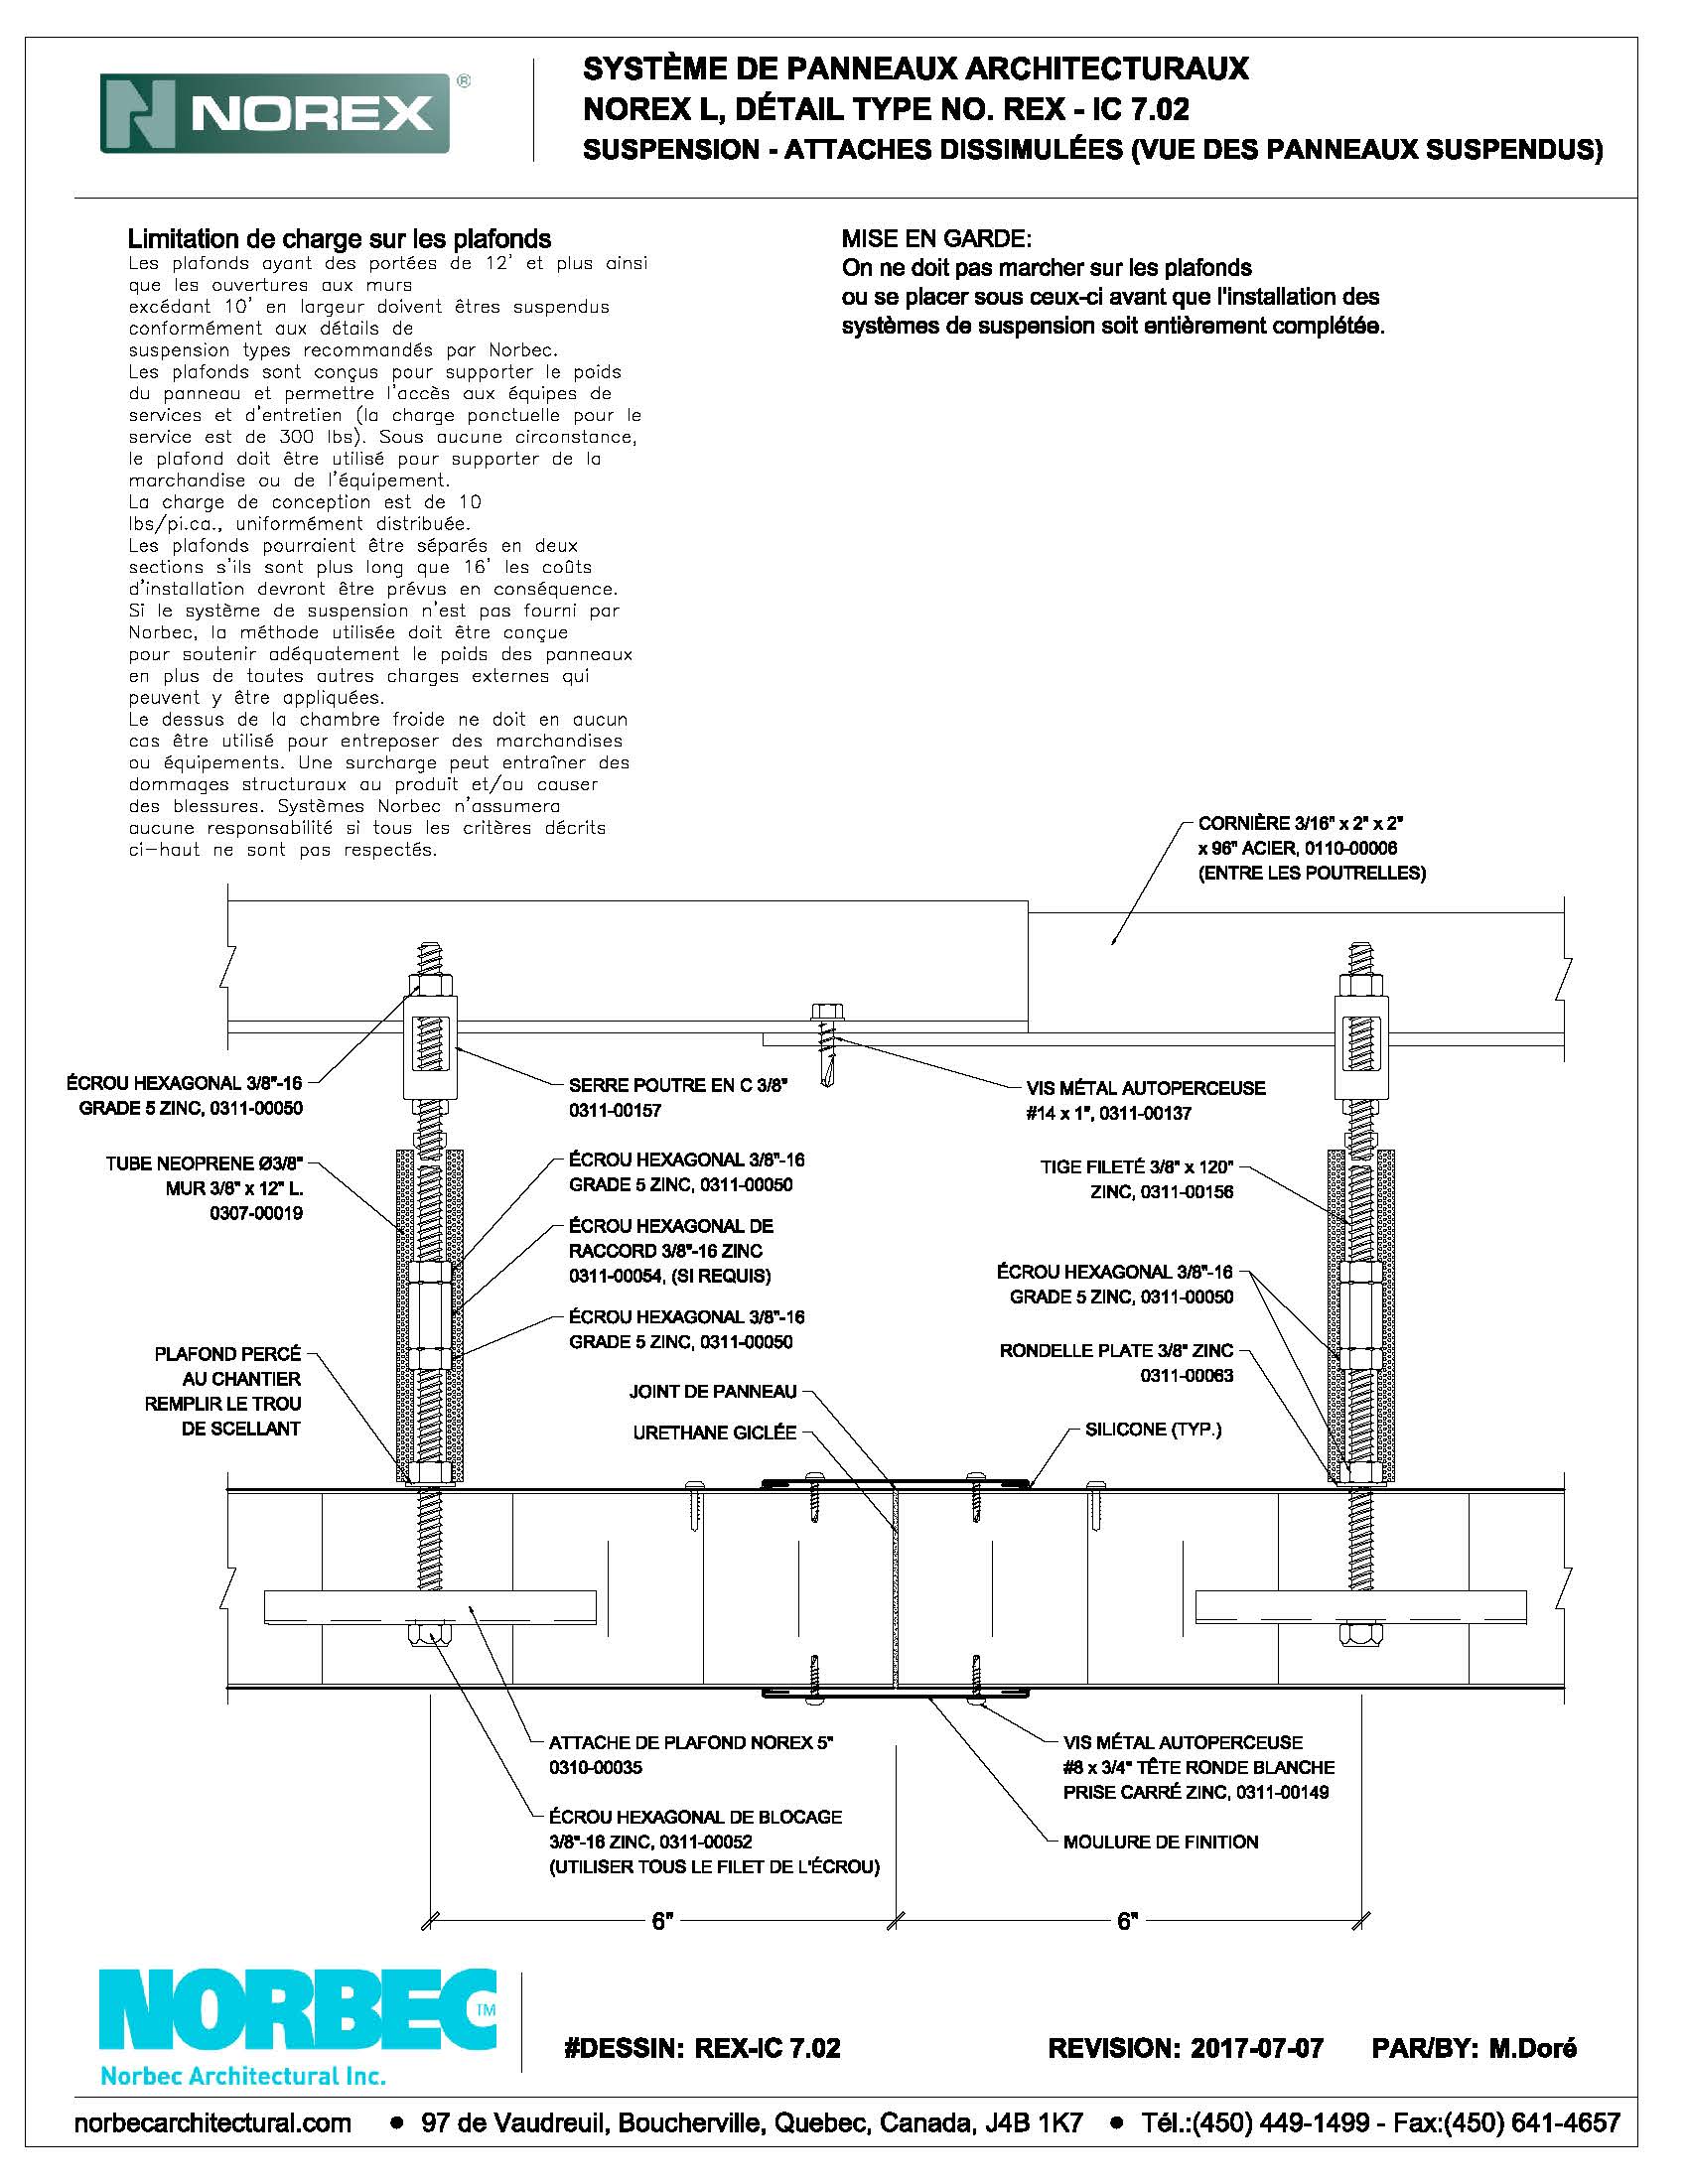 Norbec CAD Document